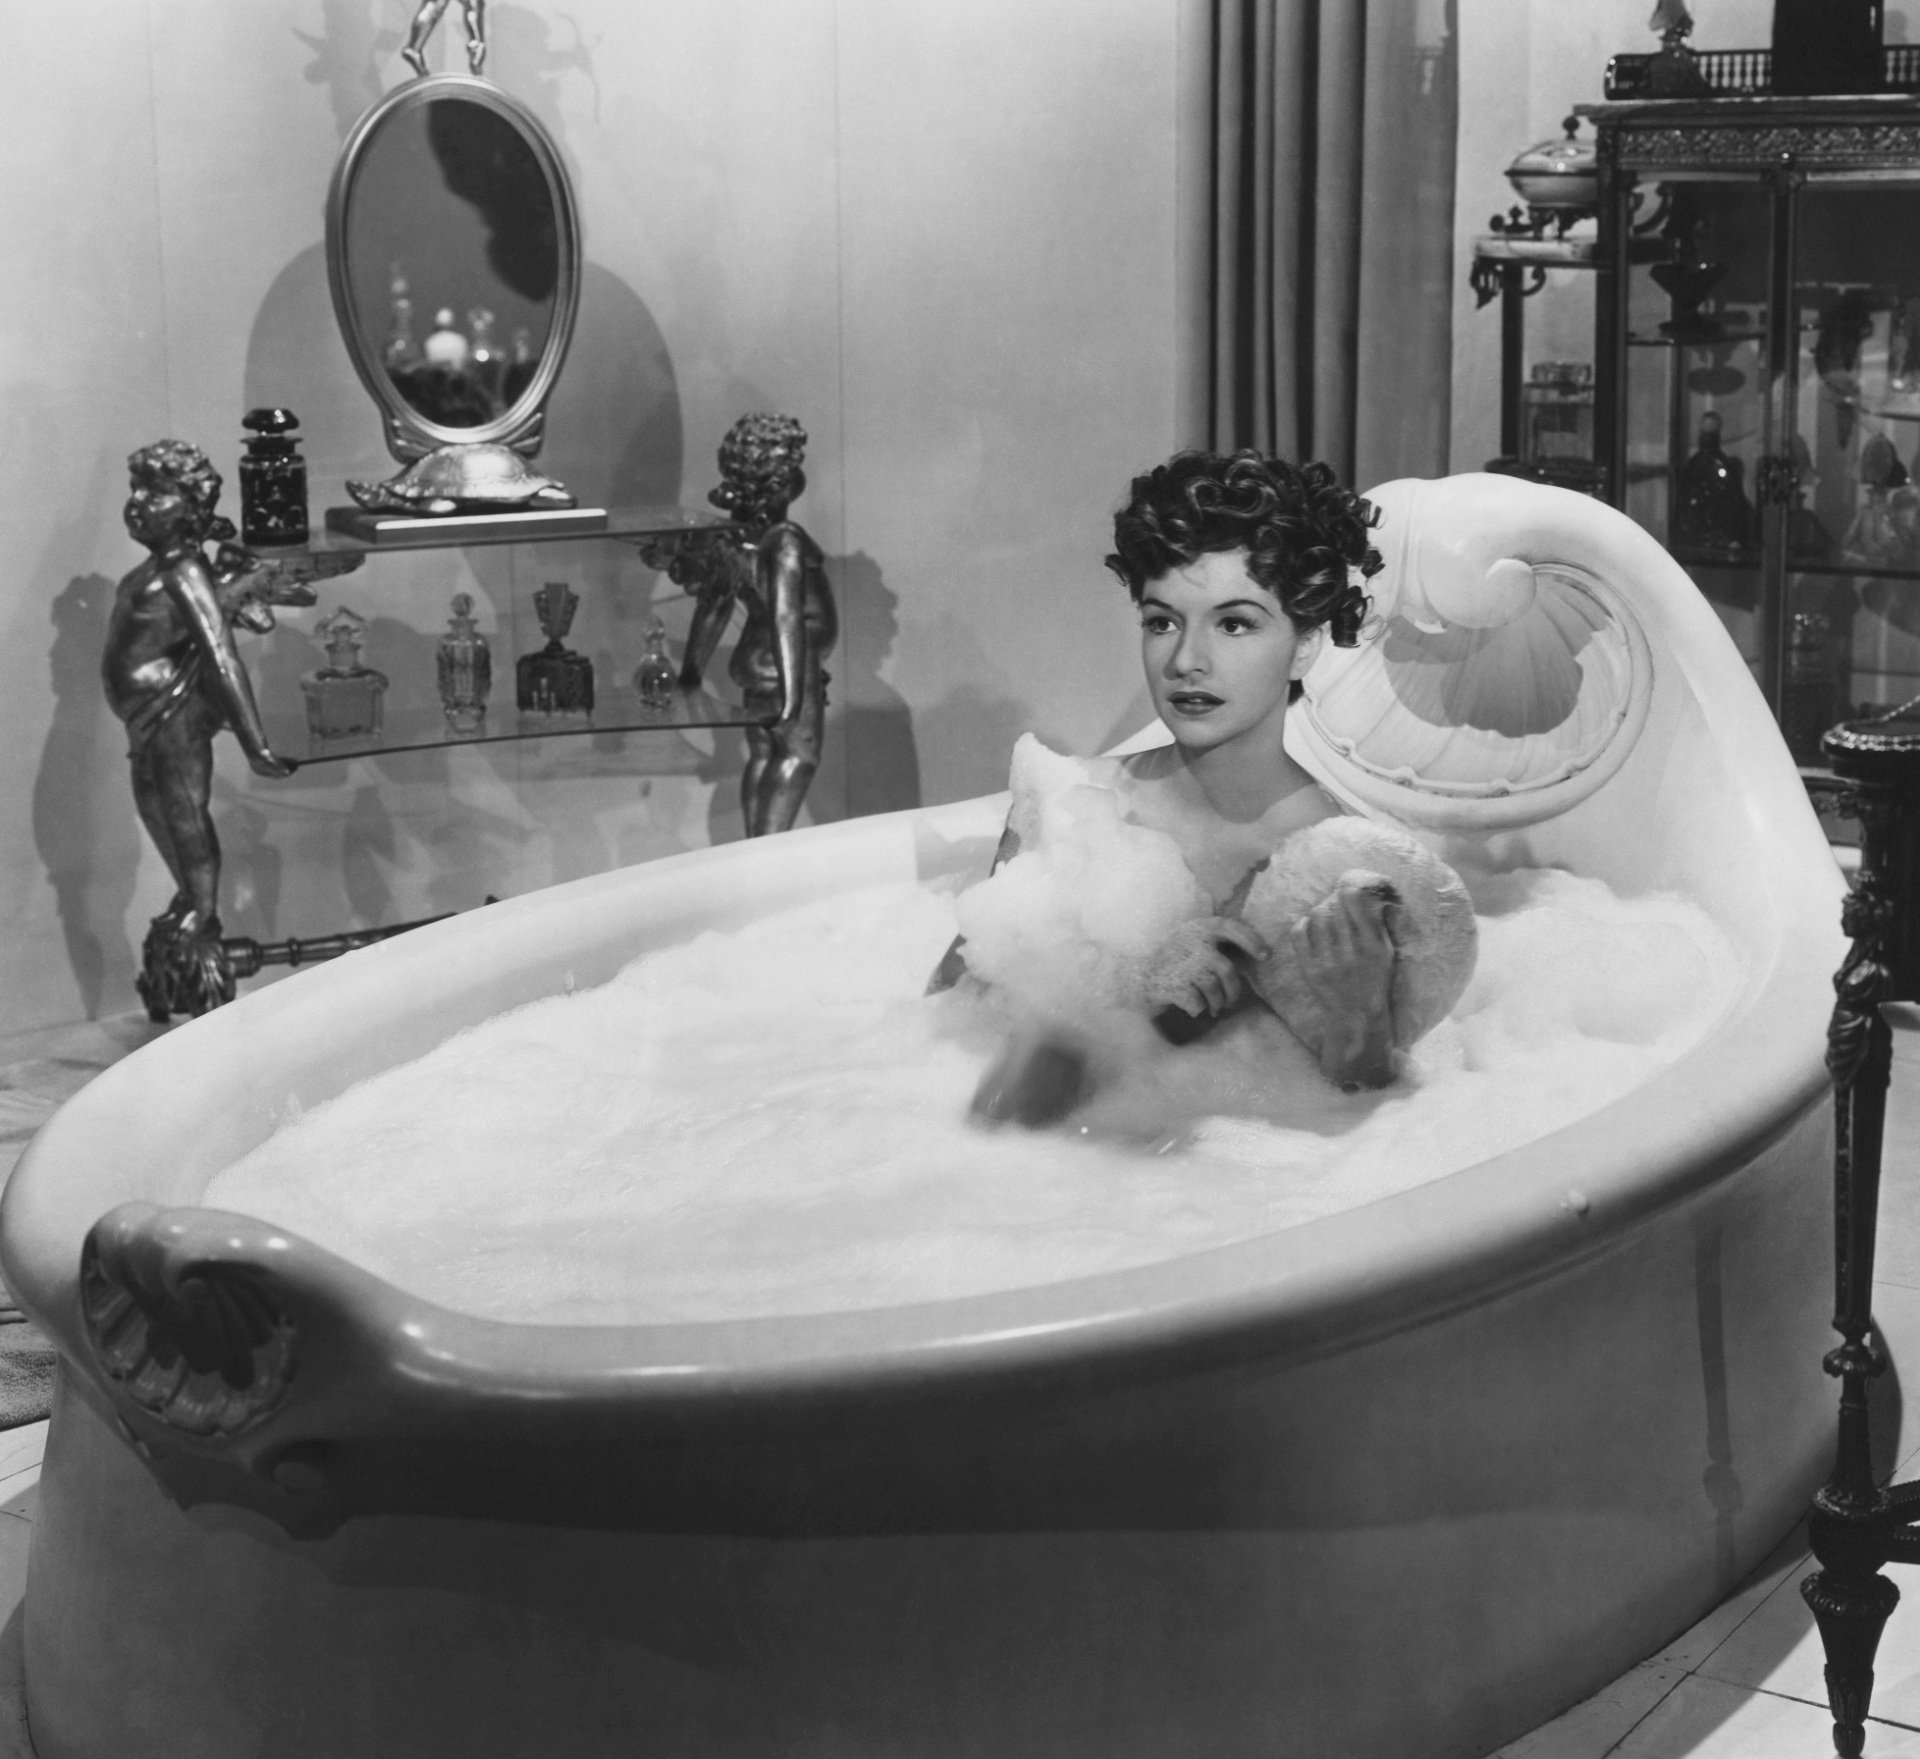 Old Fashion bubble bath tub with woman taking a bubble bath